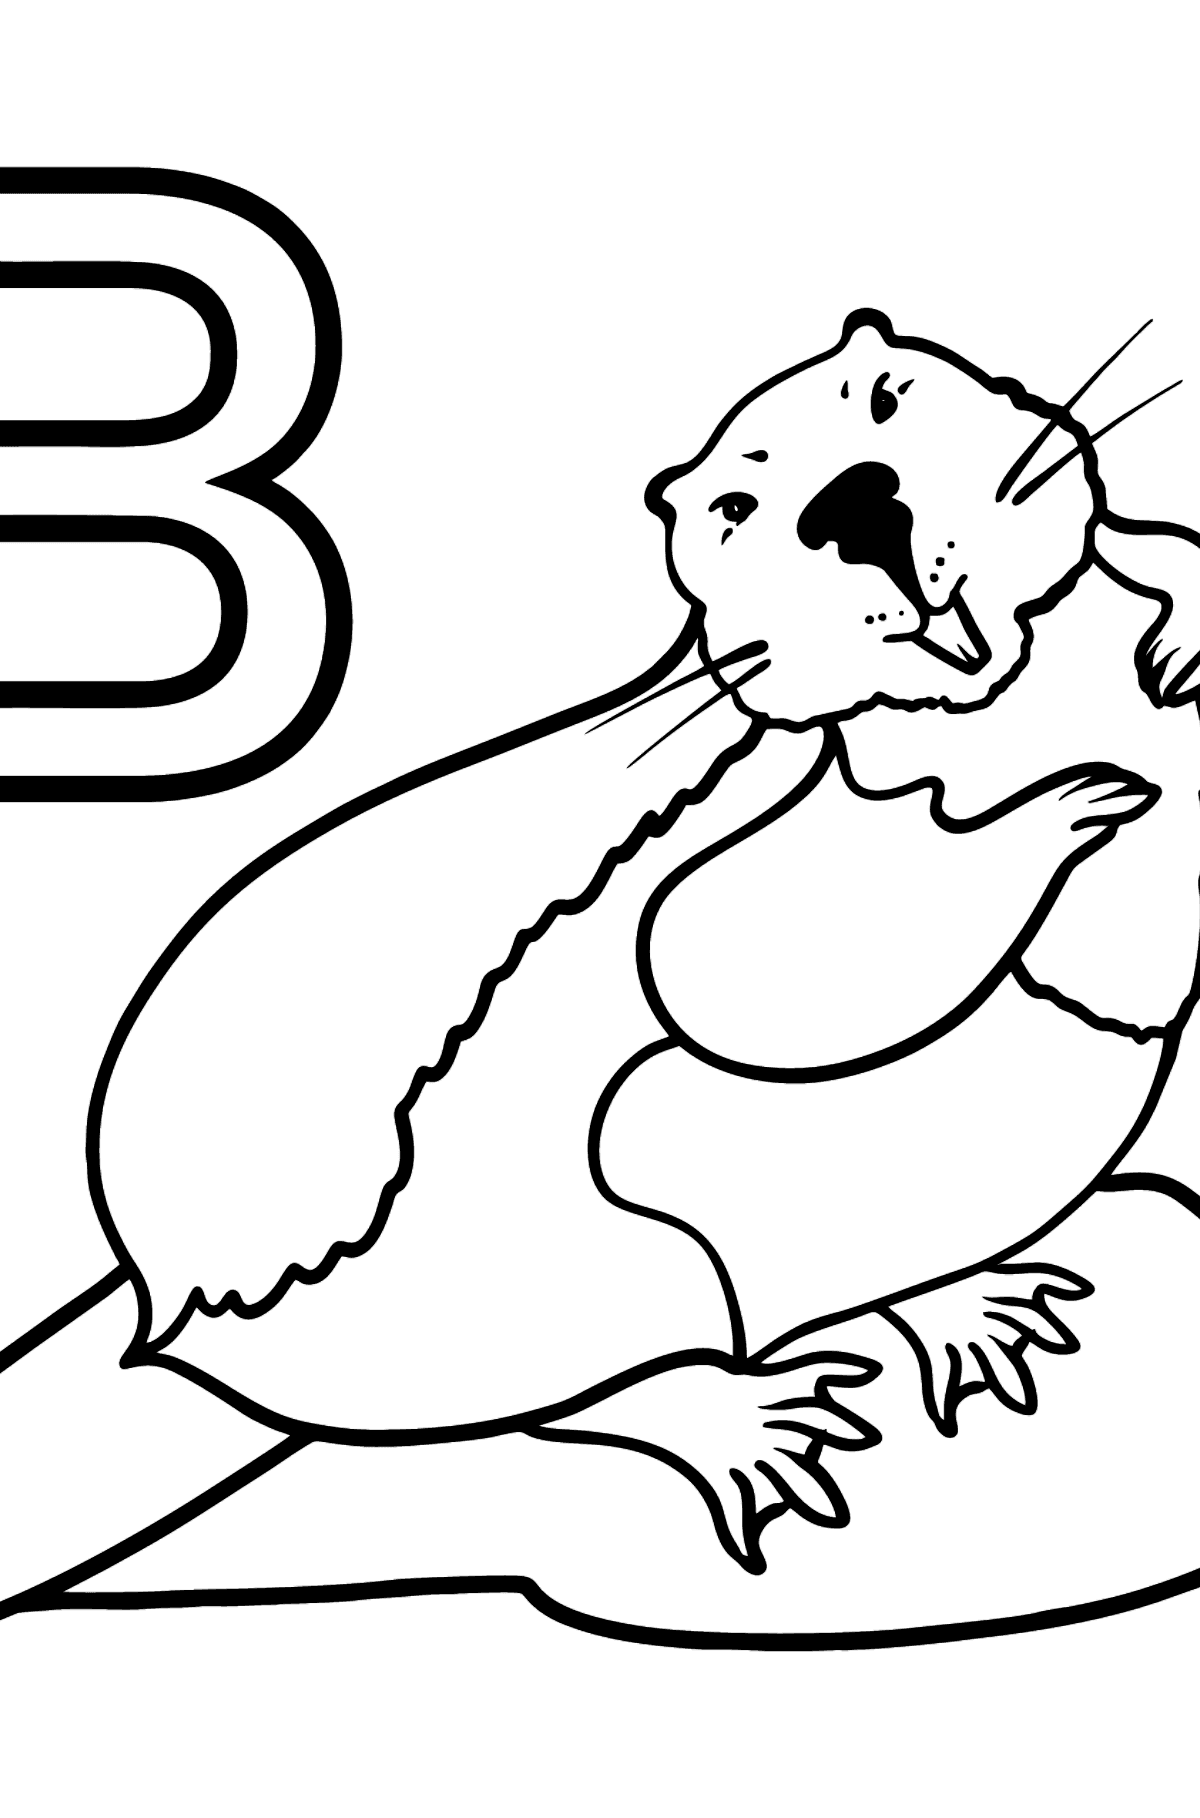 Раскраска Буква B для печати Английский алфавит - BEAVER - Картинки для Детей